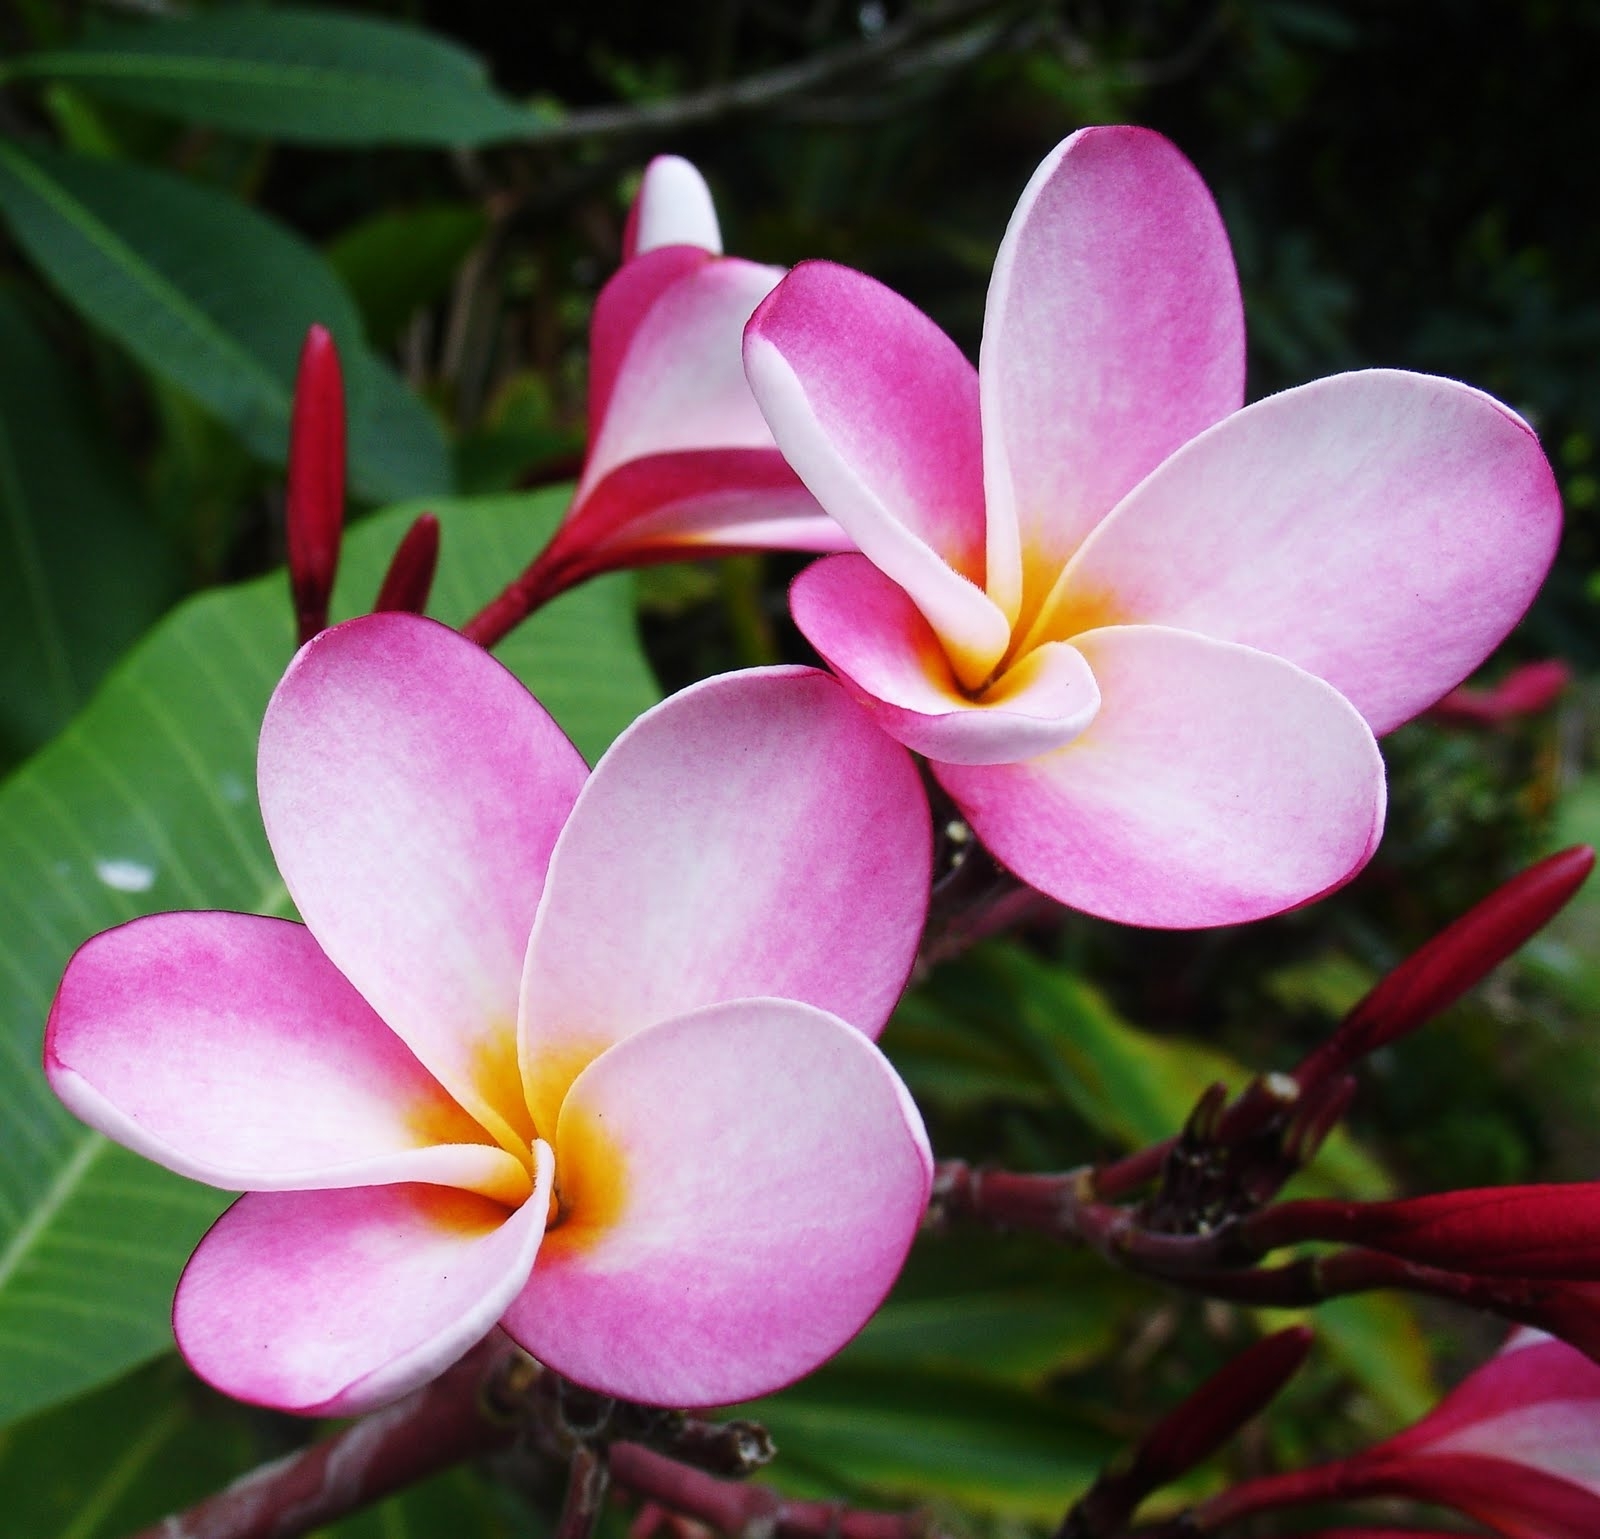 10 New Pics Of Hawaii Flowers FULL HD 1920×1080 For PC Desktop 2020